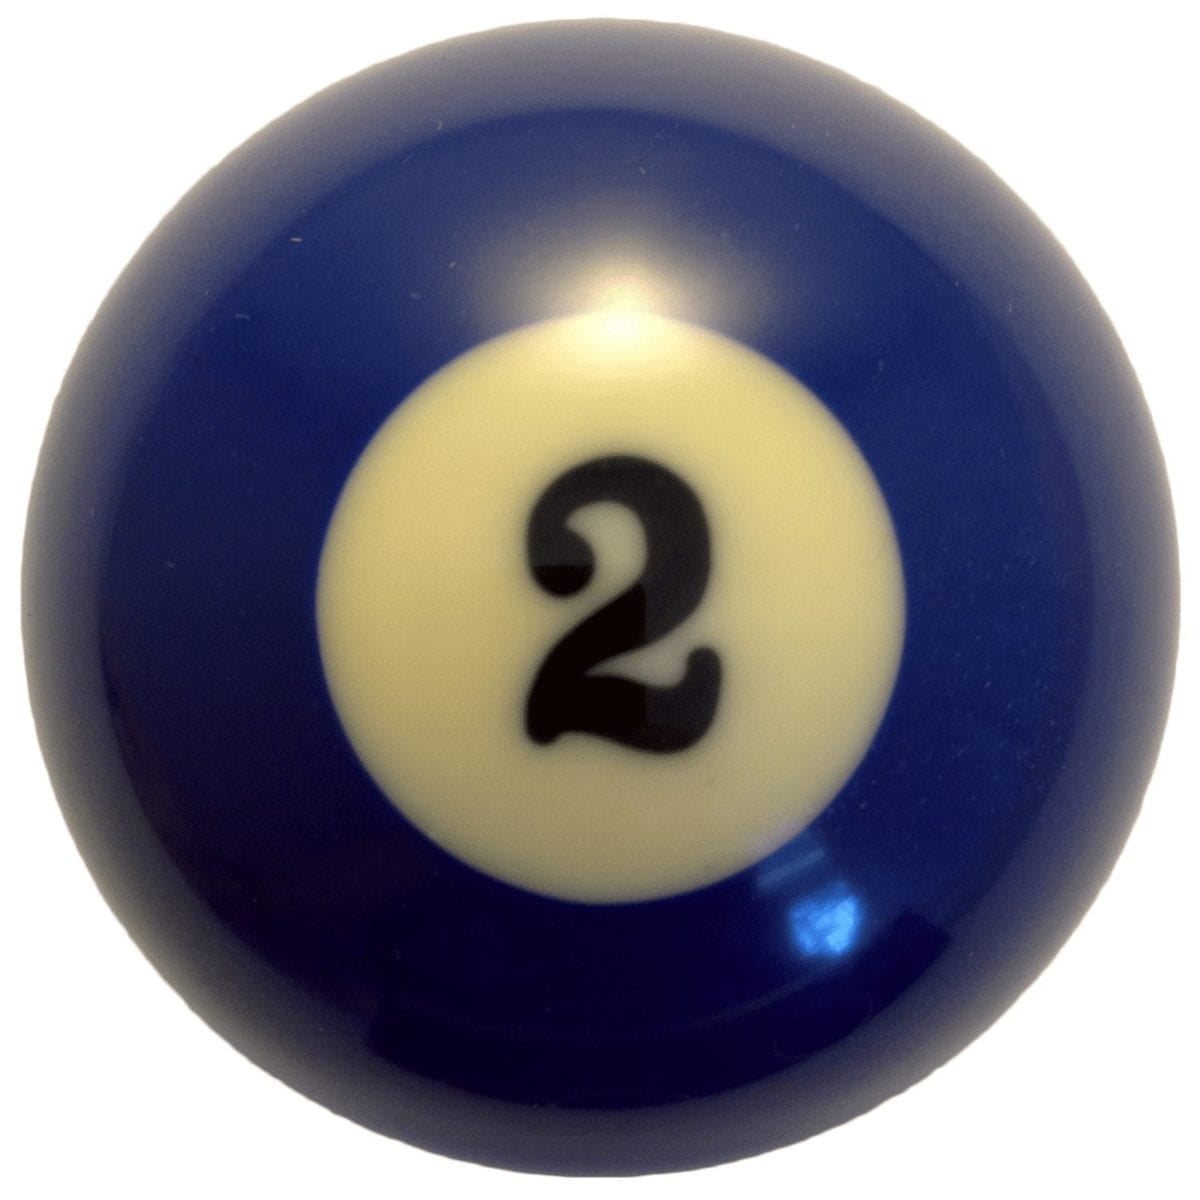 Top Selling Product Reversed BLACK & WHITE Pool Billiard Balls Set Bundle 2.25 